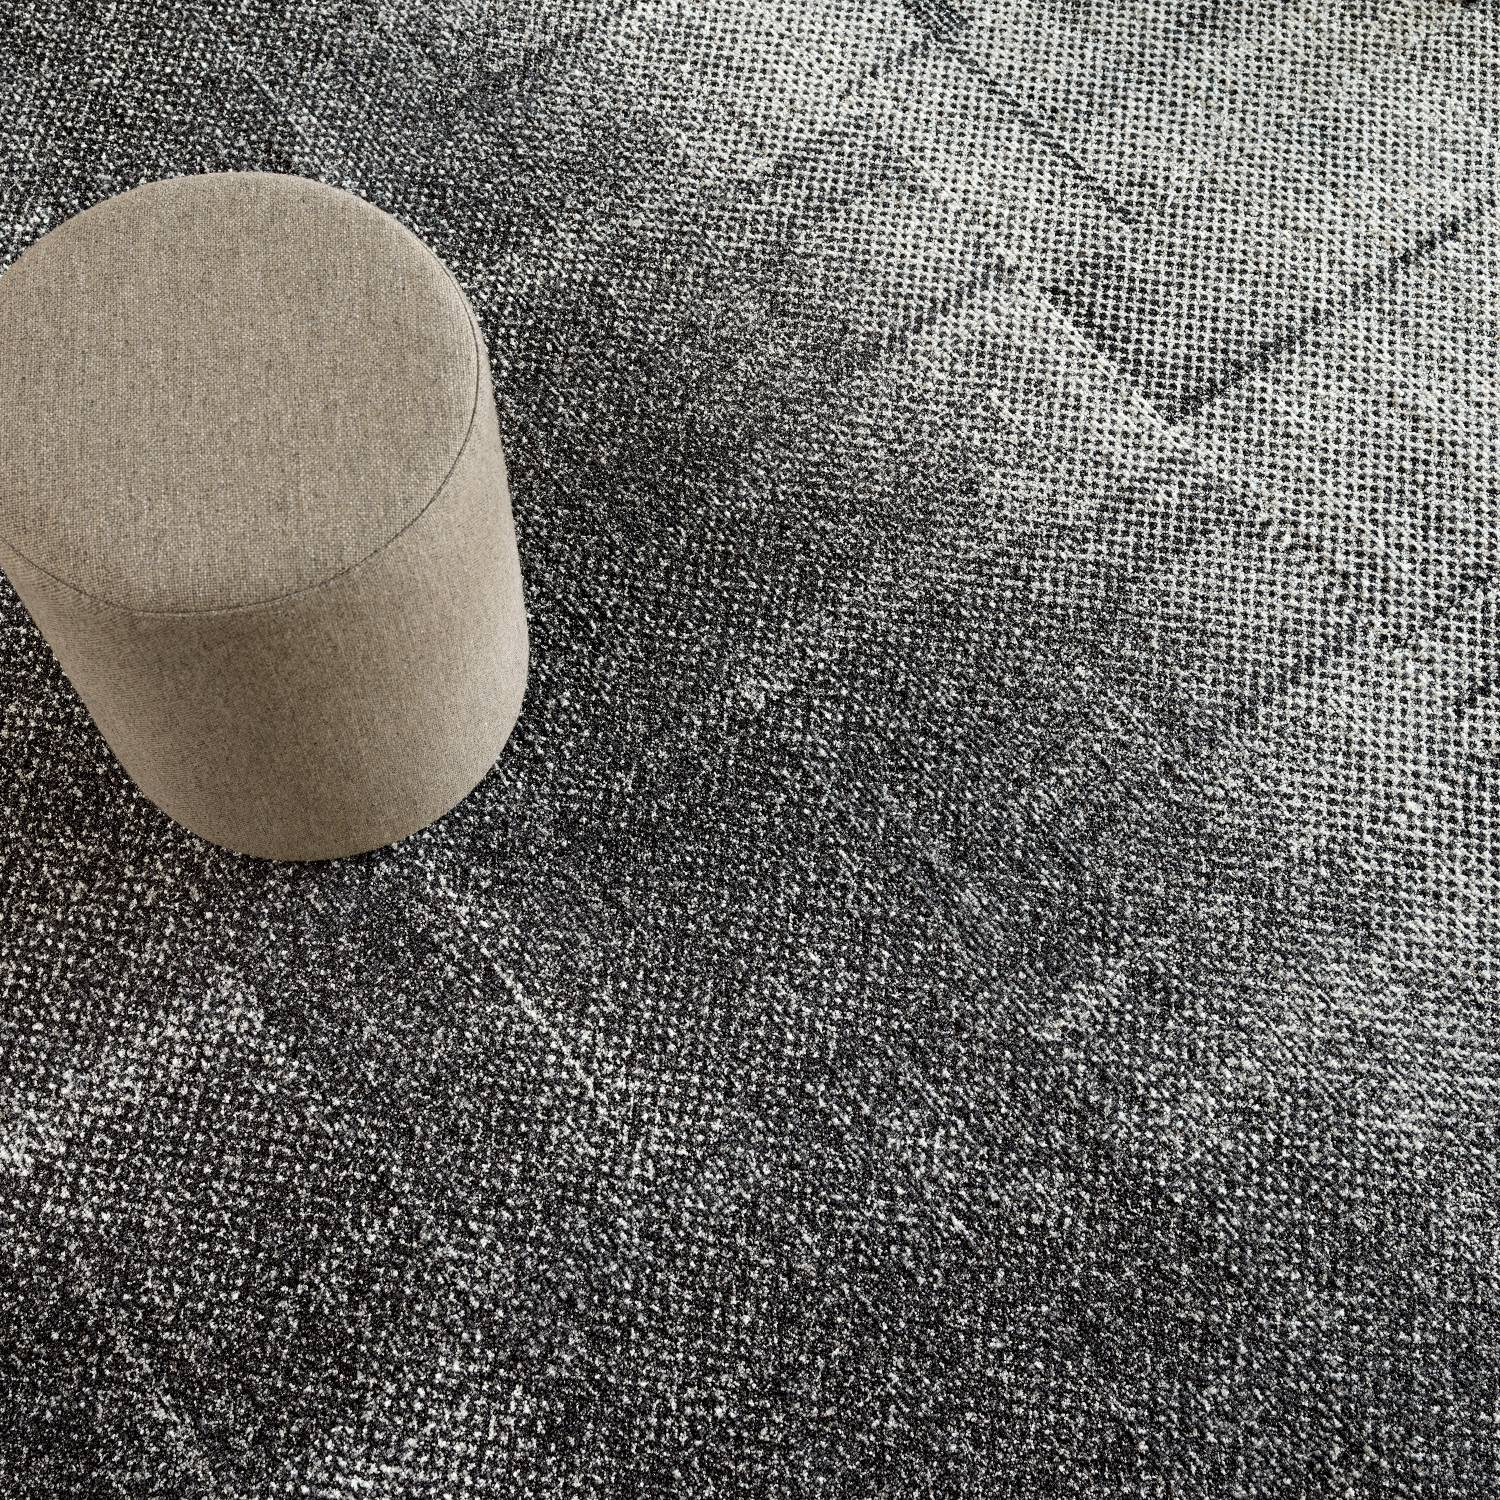 ReForm Transition Carpet Tiles and Planks - Tufted Loop Pile Carpet Tiles and Planks